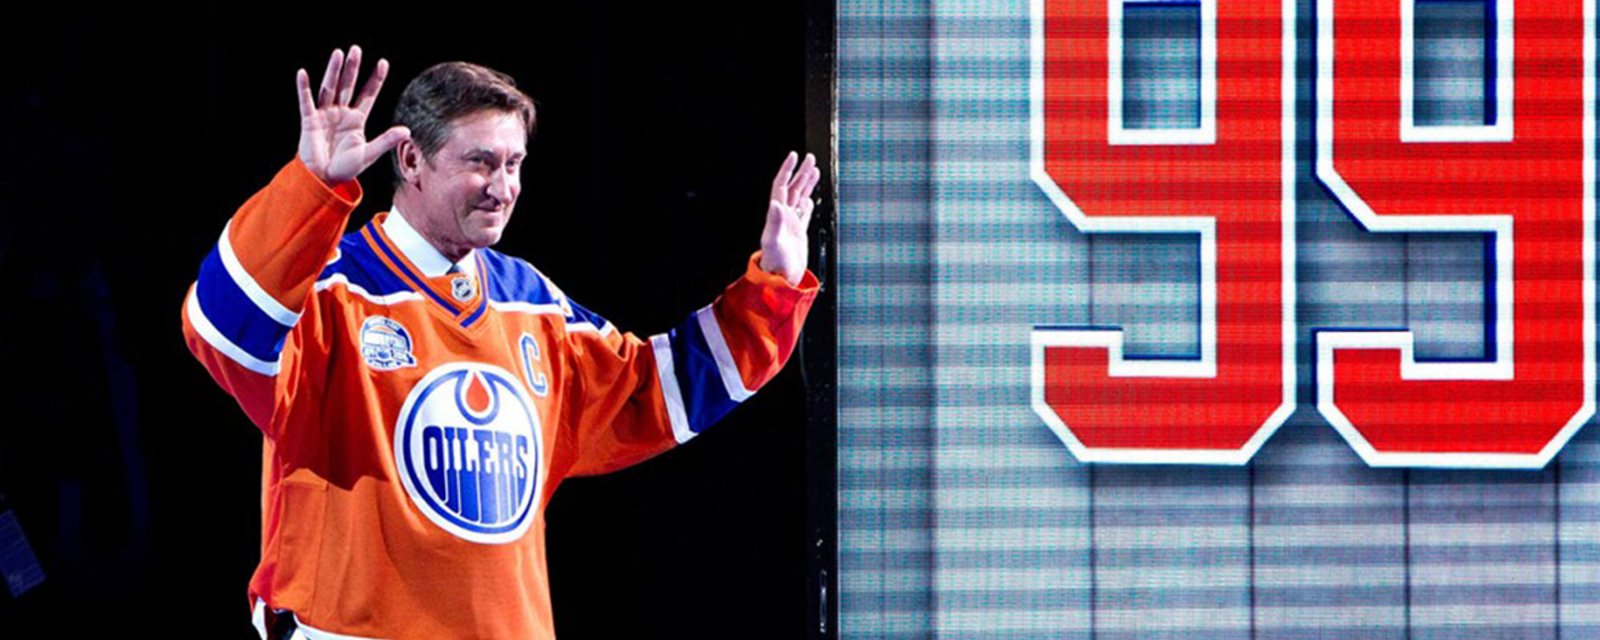 Report: Gretzky pushing Chiarelli out?